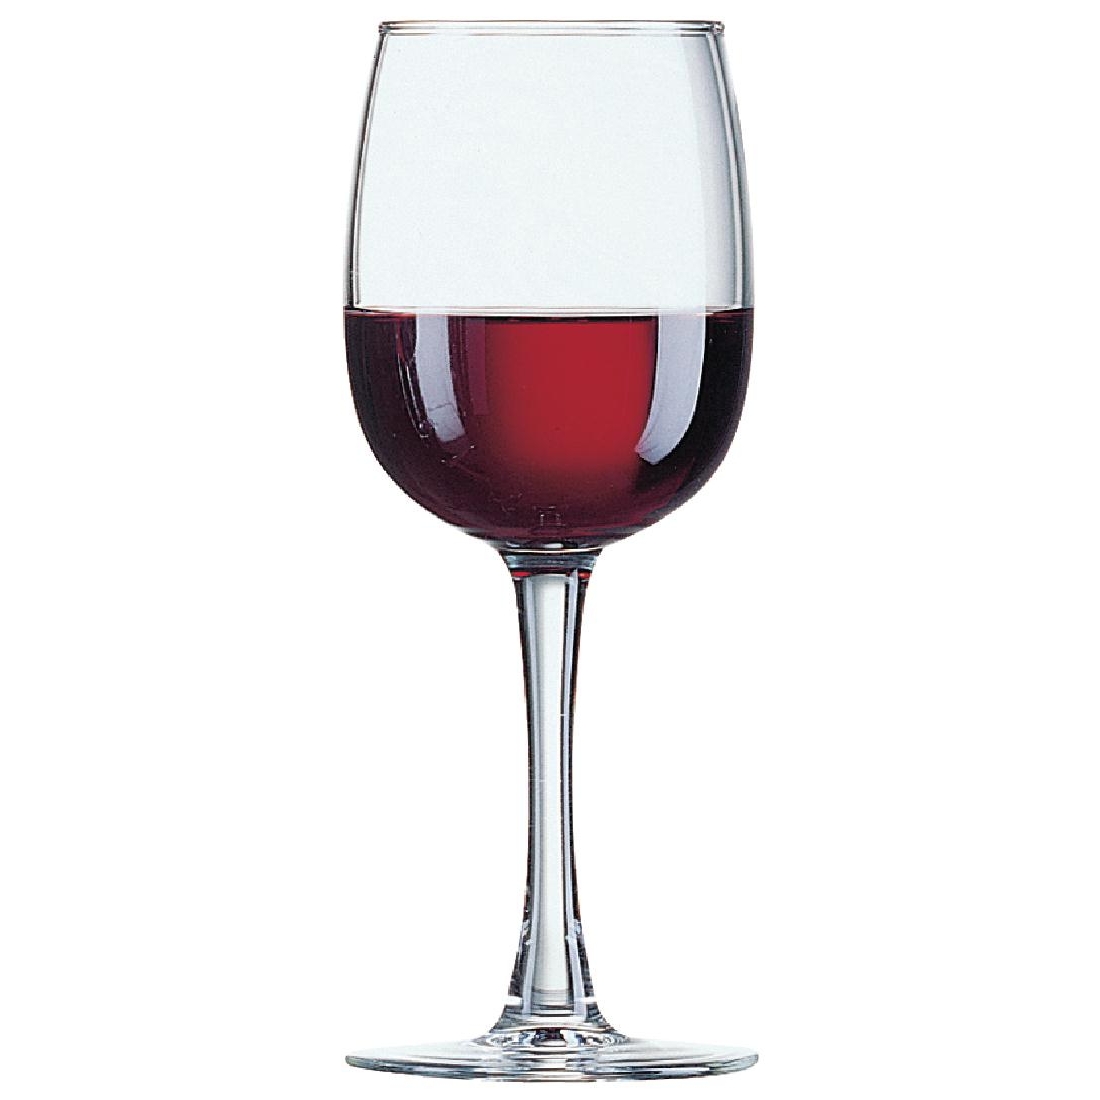 Arcoroc Elisa Wine Glasses 300ml CE Marked at 250ml